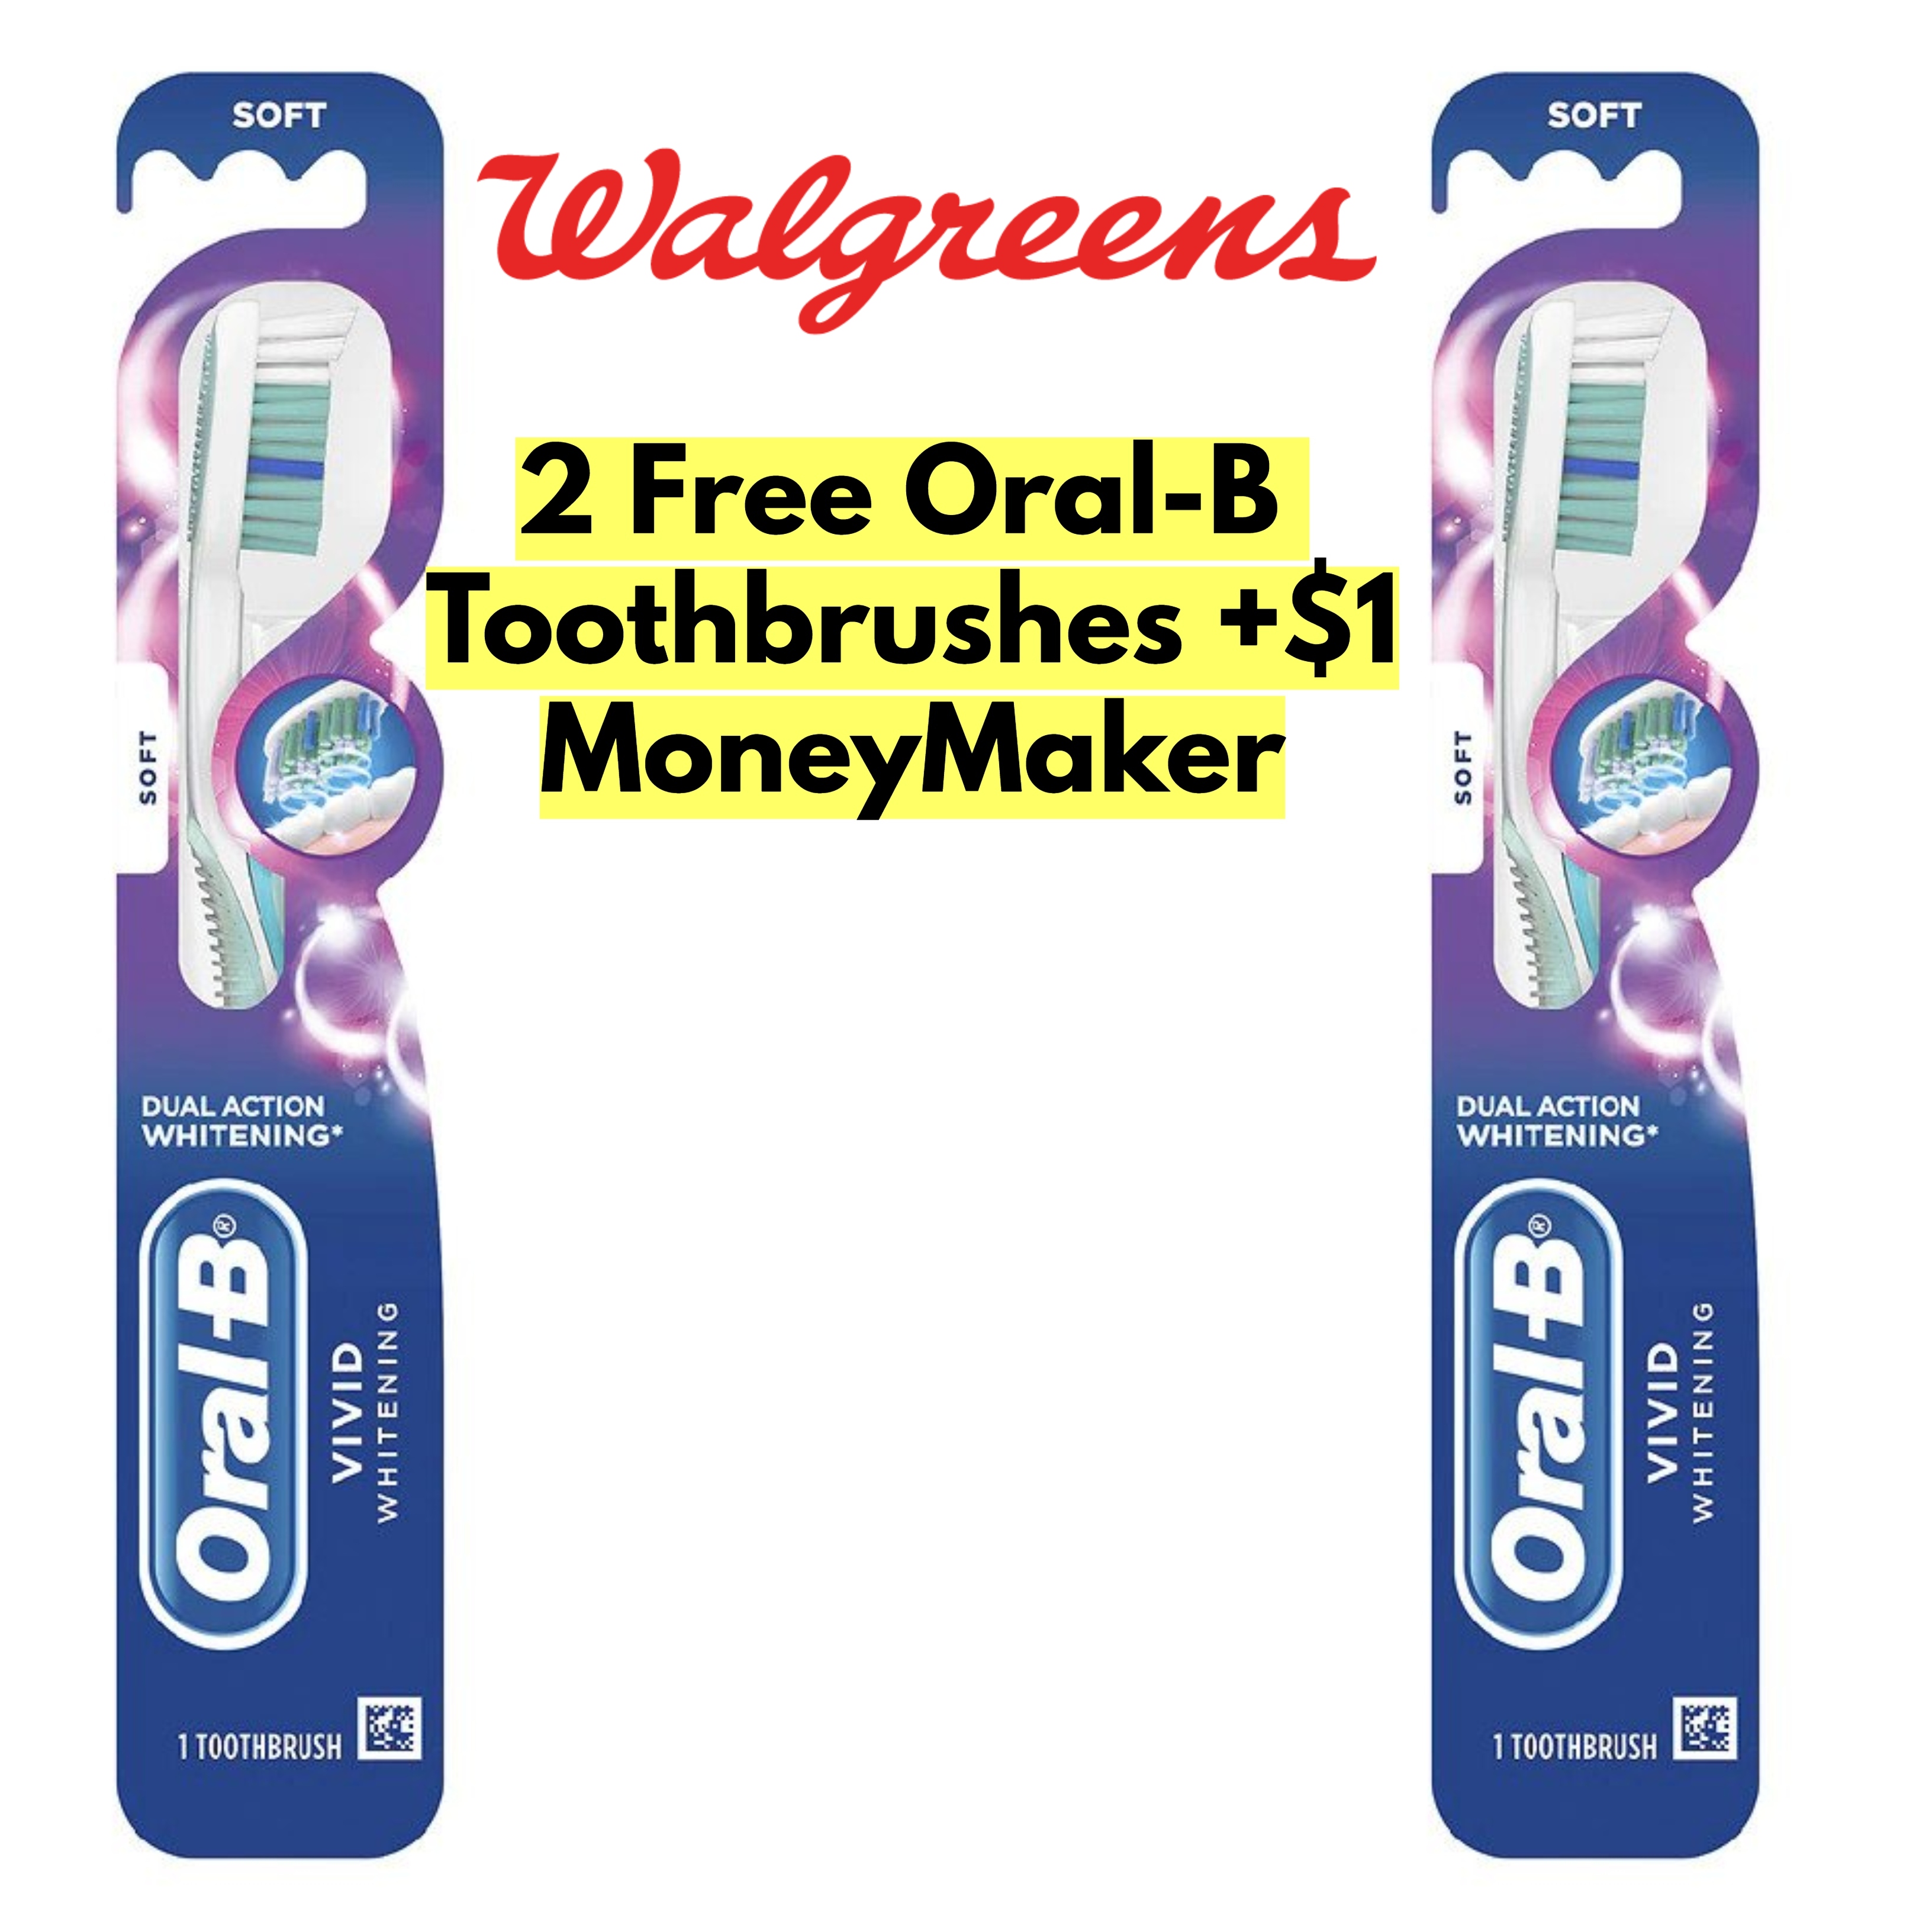 Free 2 Oral-B Toothbrush at Walgreens